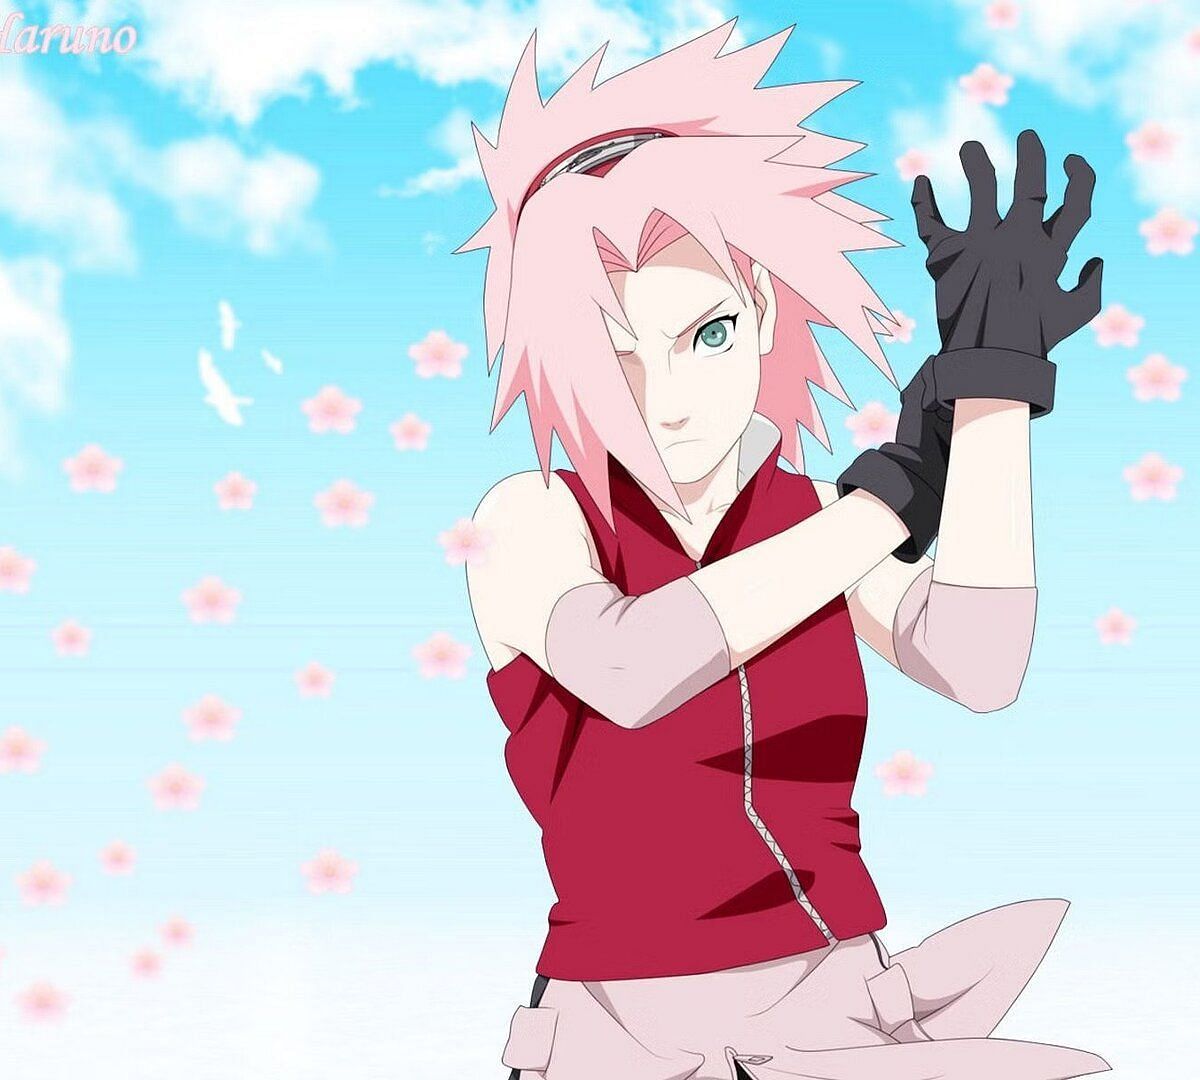 Naruto: Sakura's criticism overshadows her best traits - Dexerto